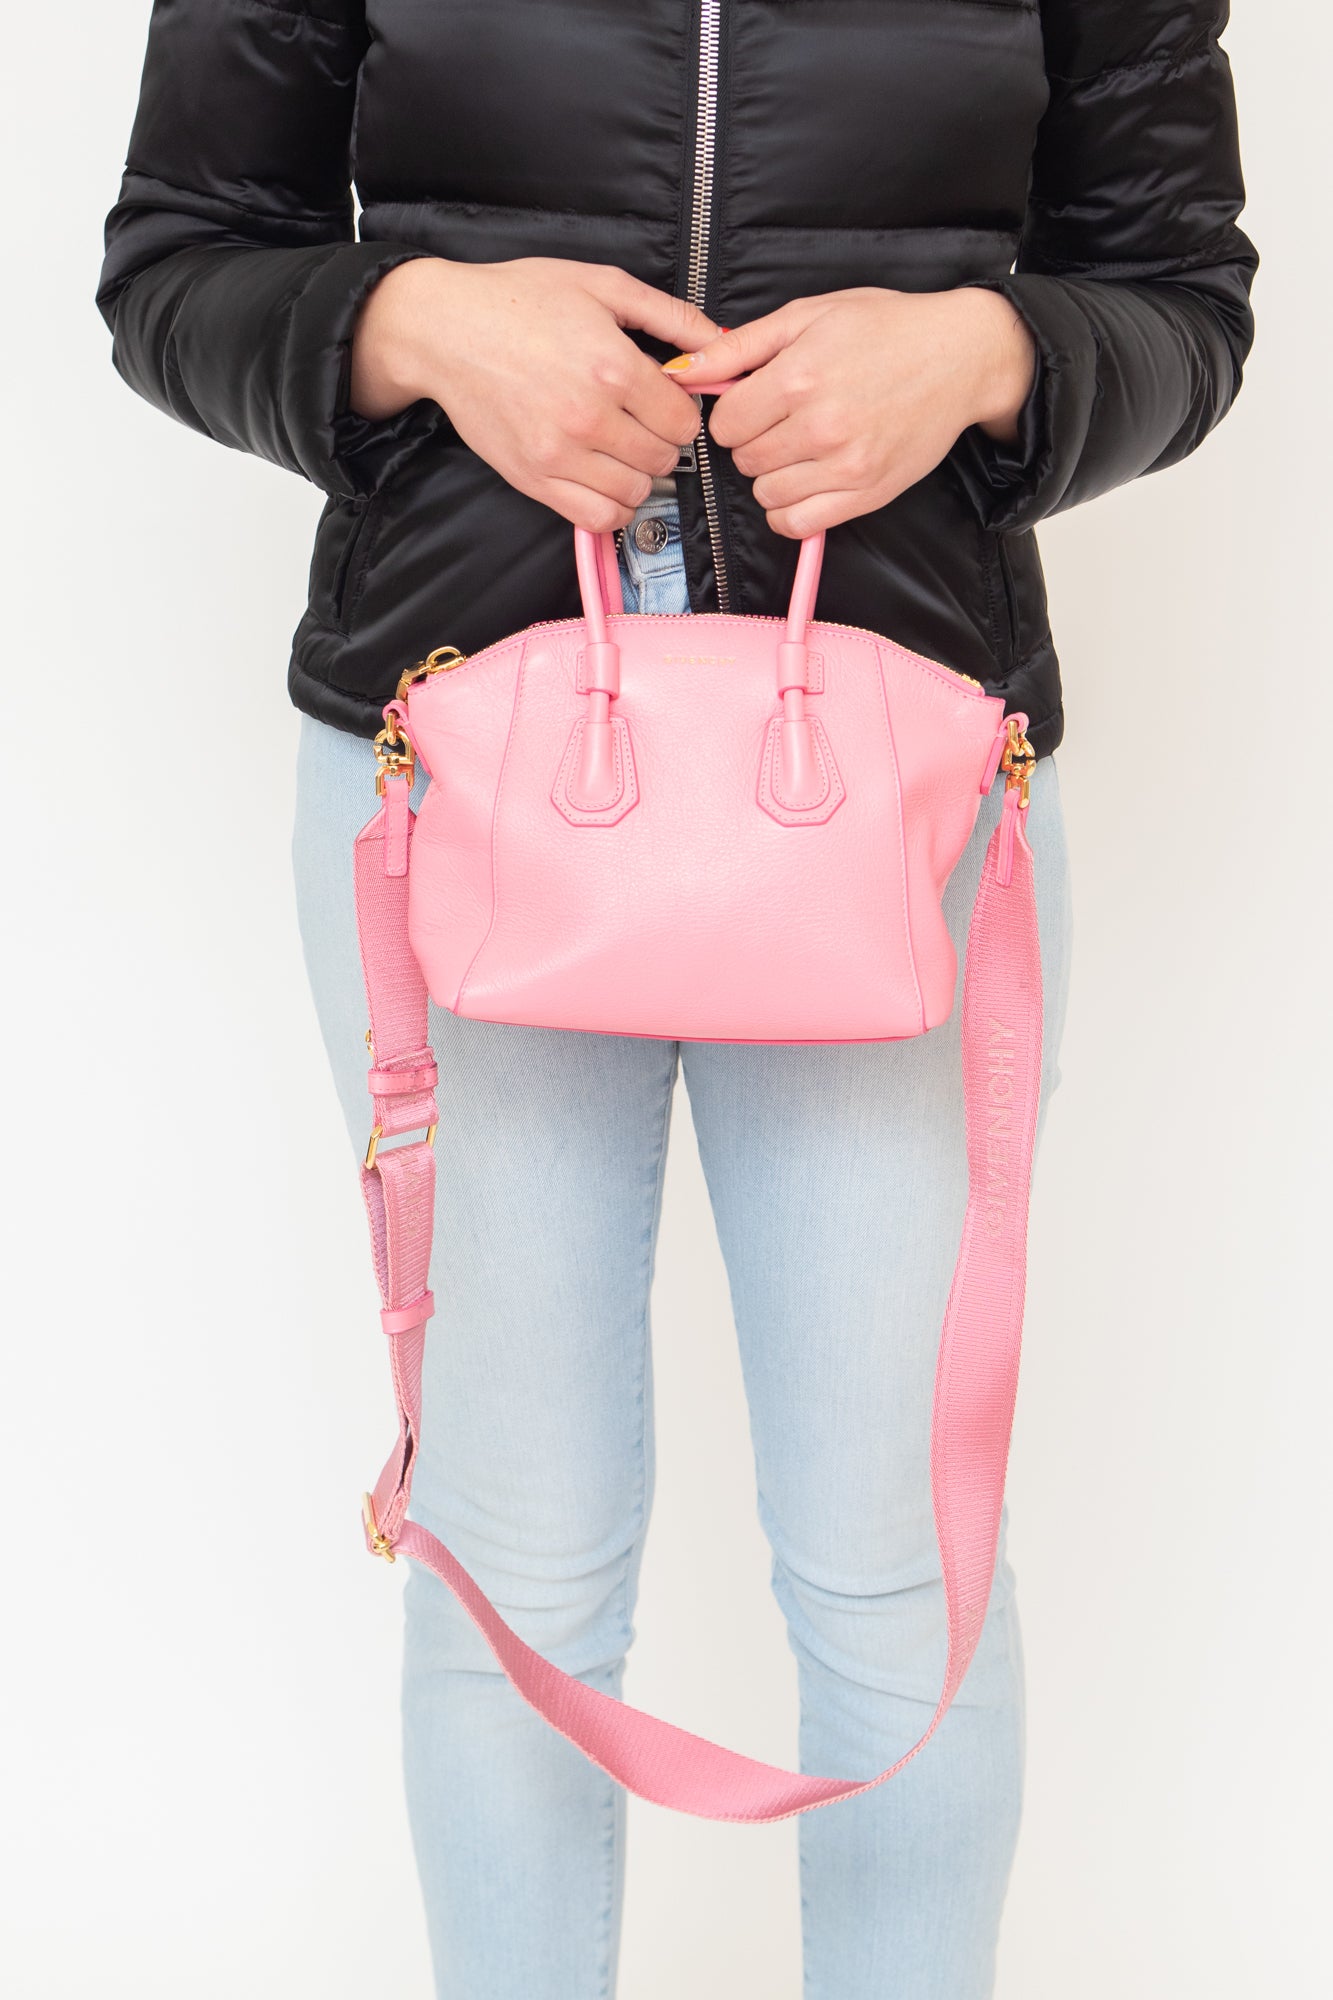 Pink Leather Mini Antigona Bag